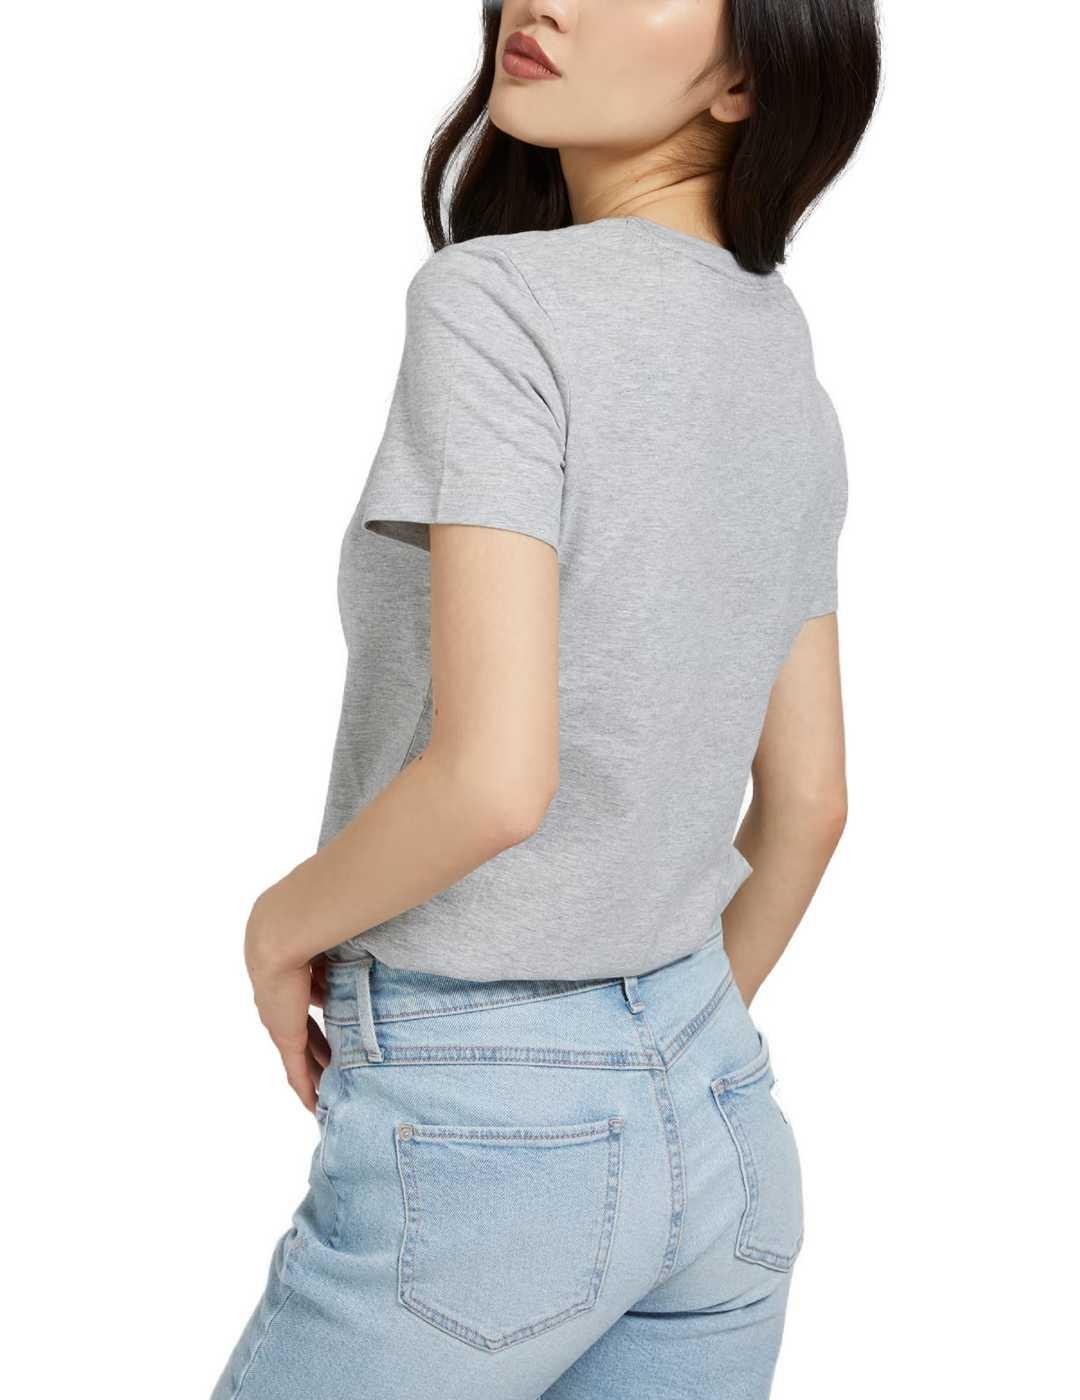 Camiseta Guess original basica gris para mujer